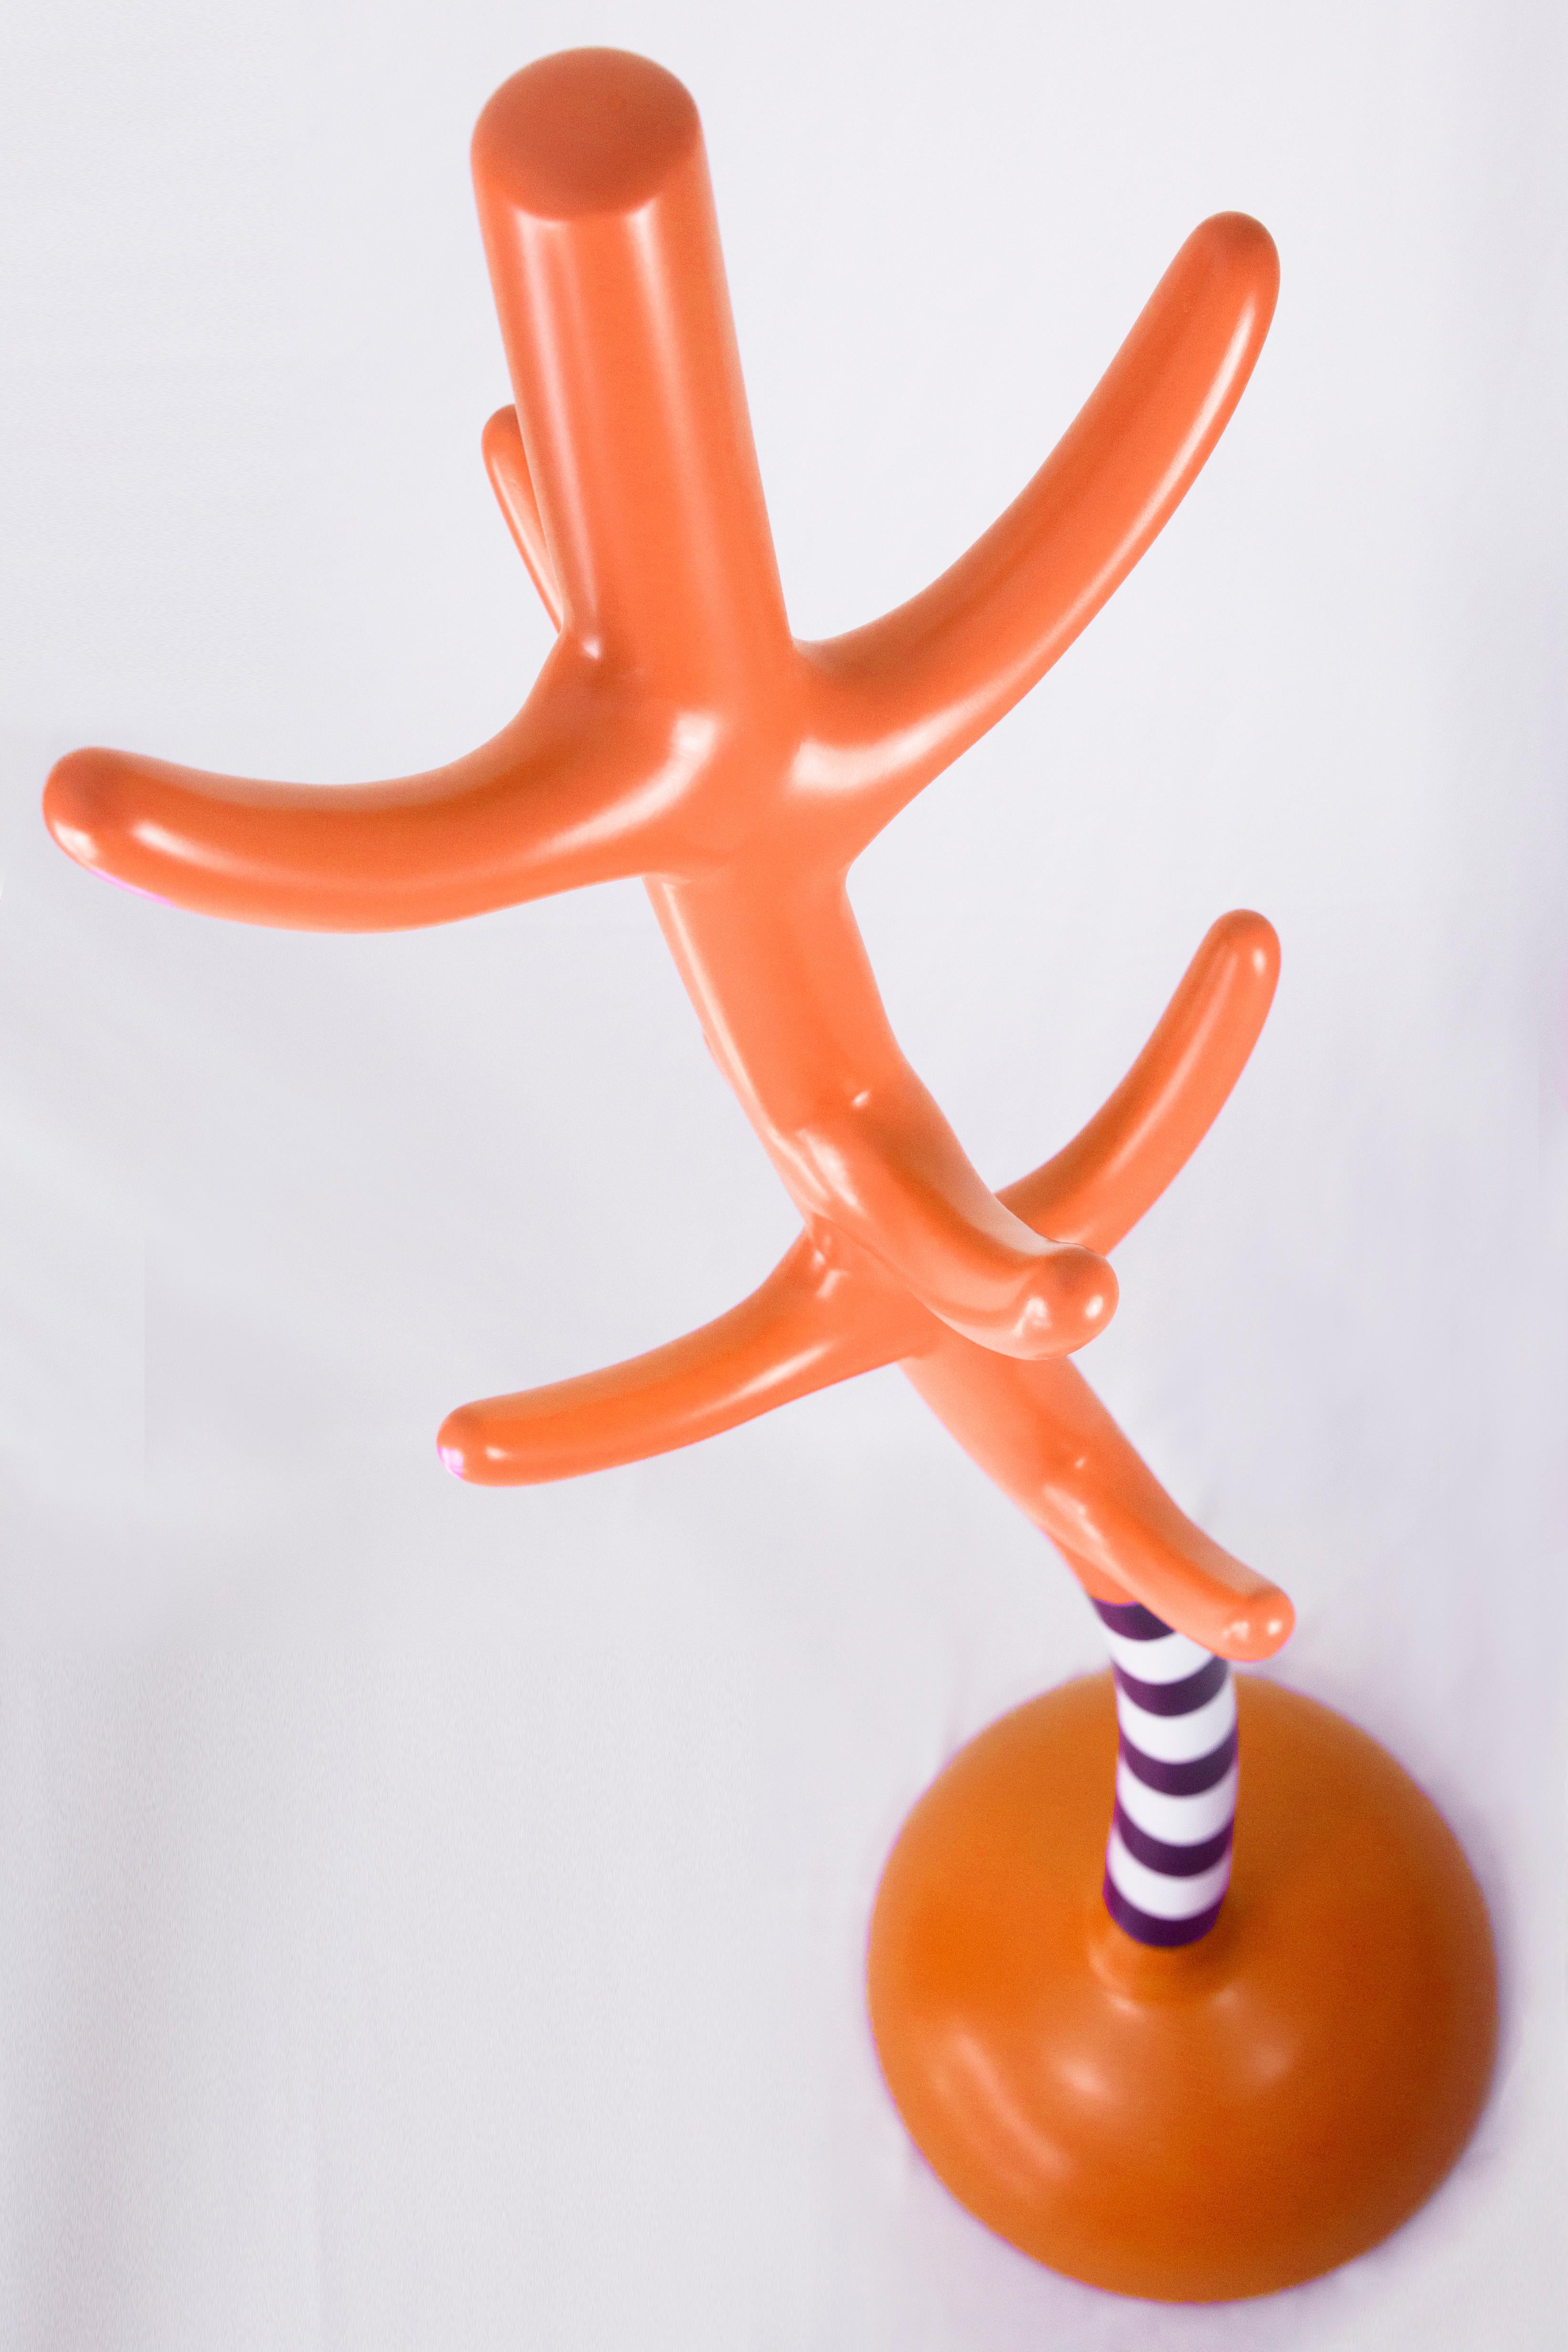 Turkish Crooked Orange Colourful Coat Rack, Amorphous Sculpture, Artistic For Sale